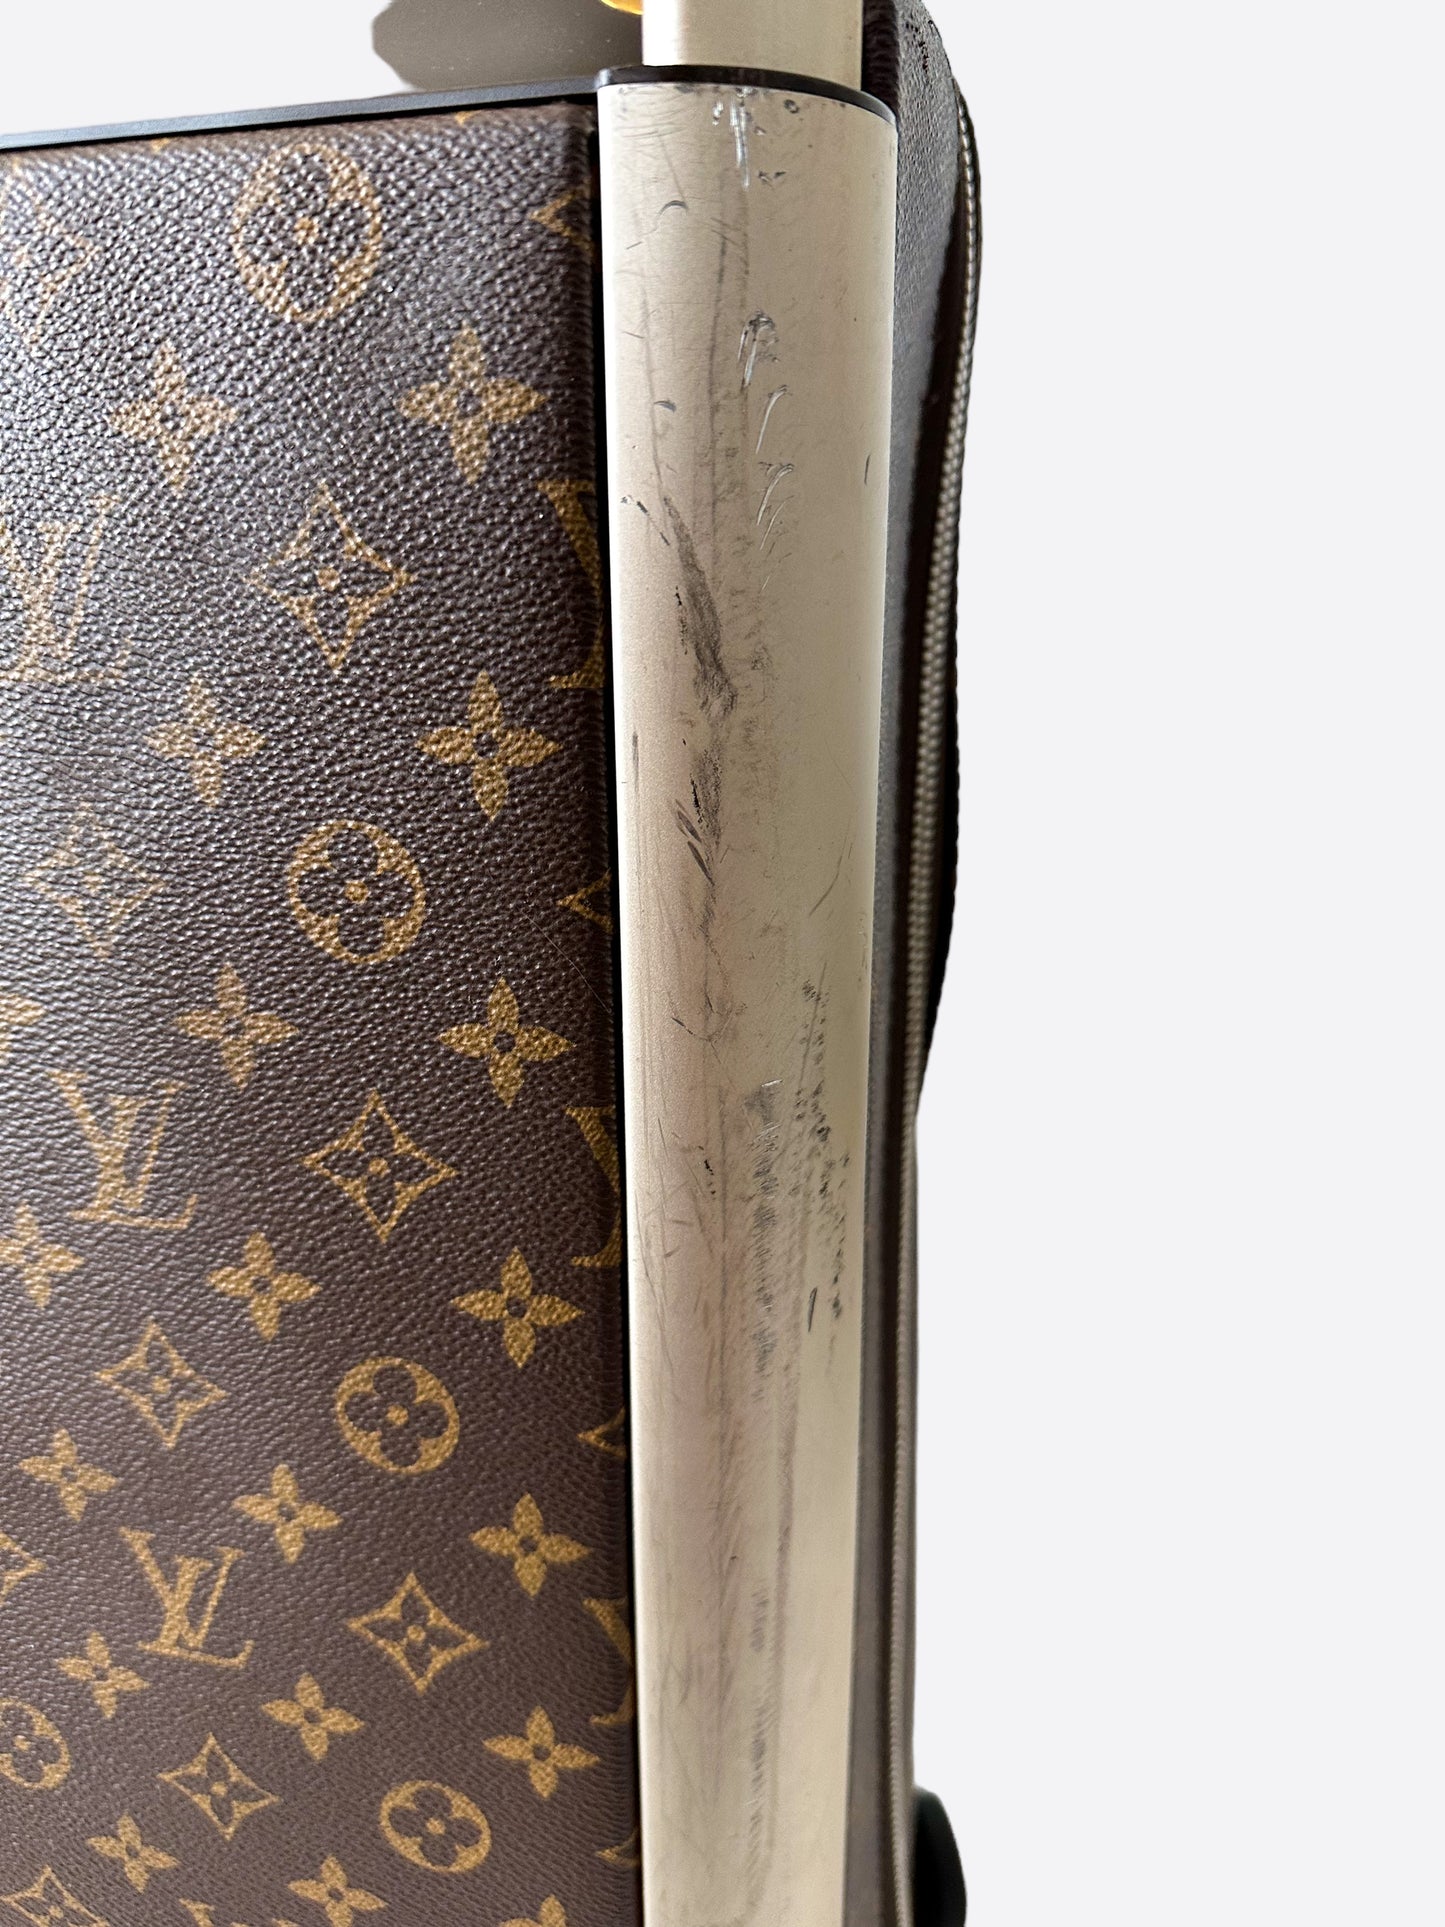 Louis Vuitton Horizon 55 Monogram Brown